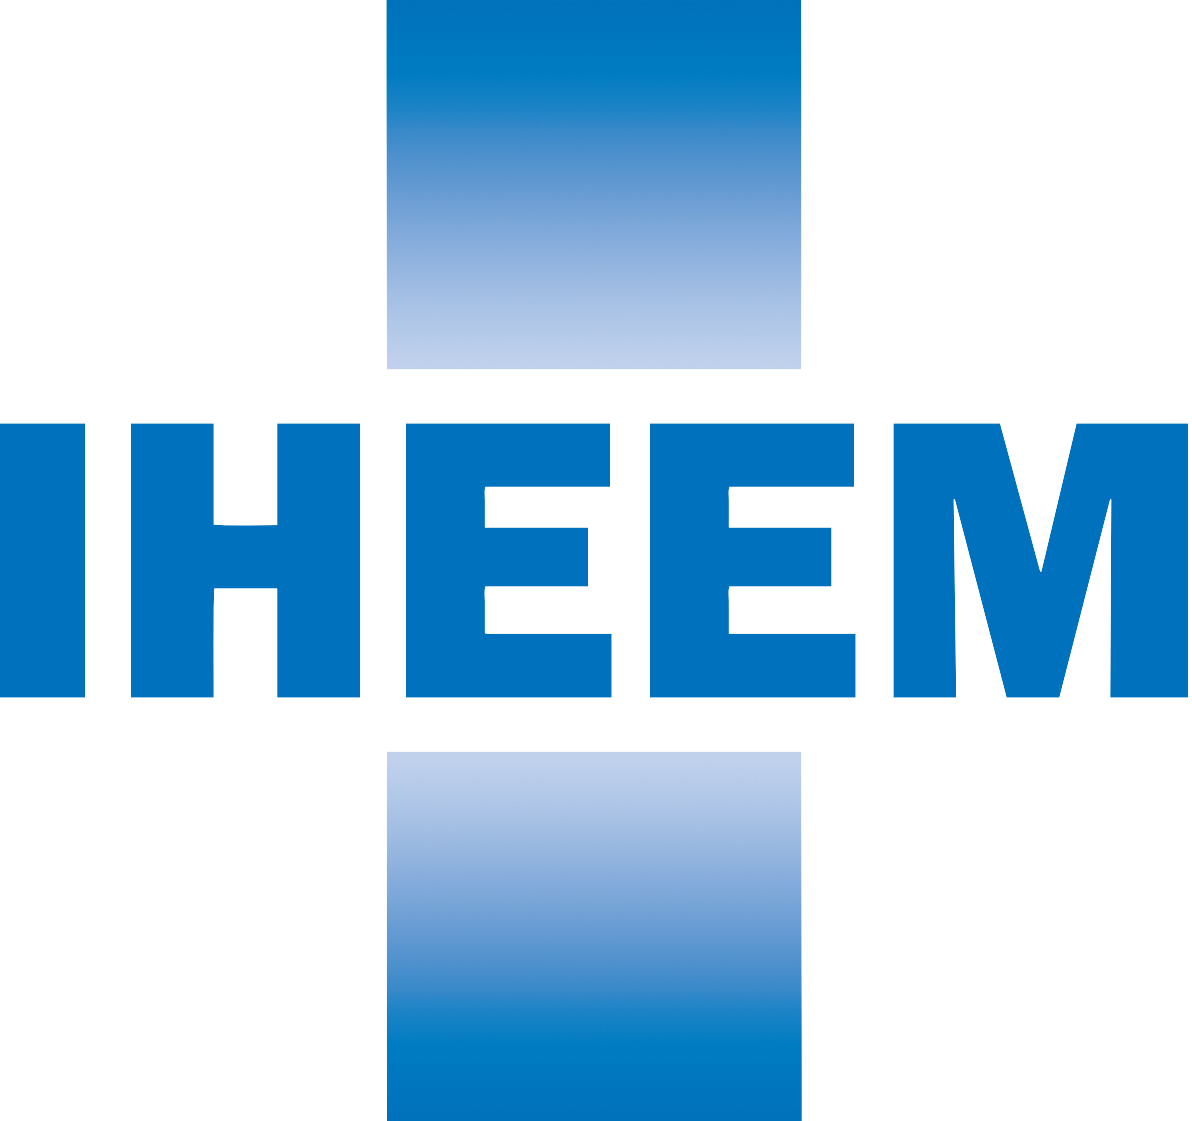 IHEEM logo